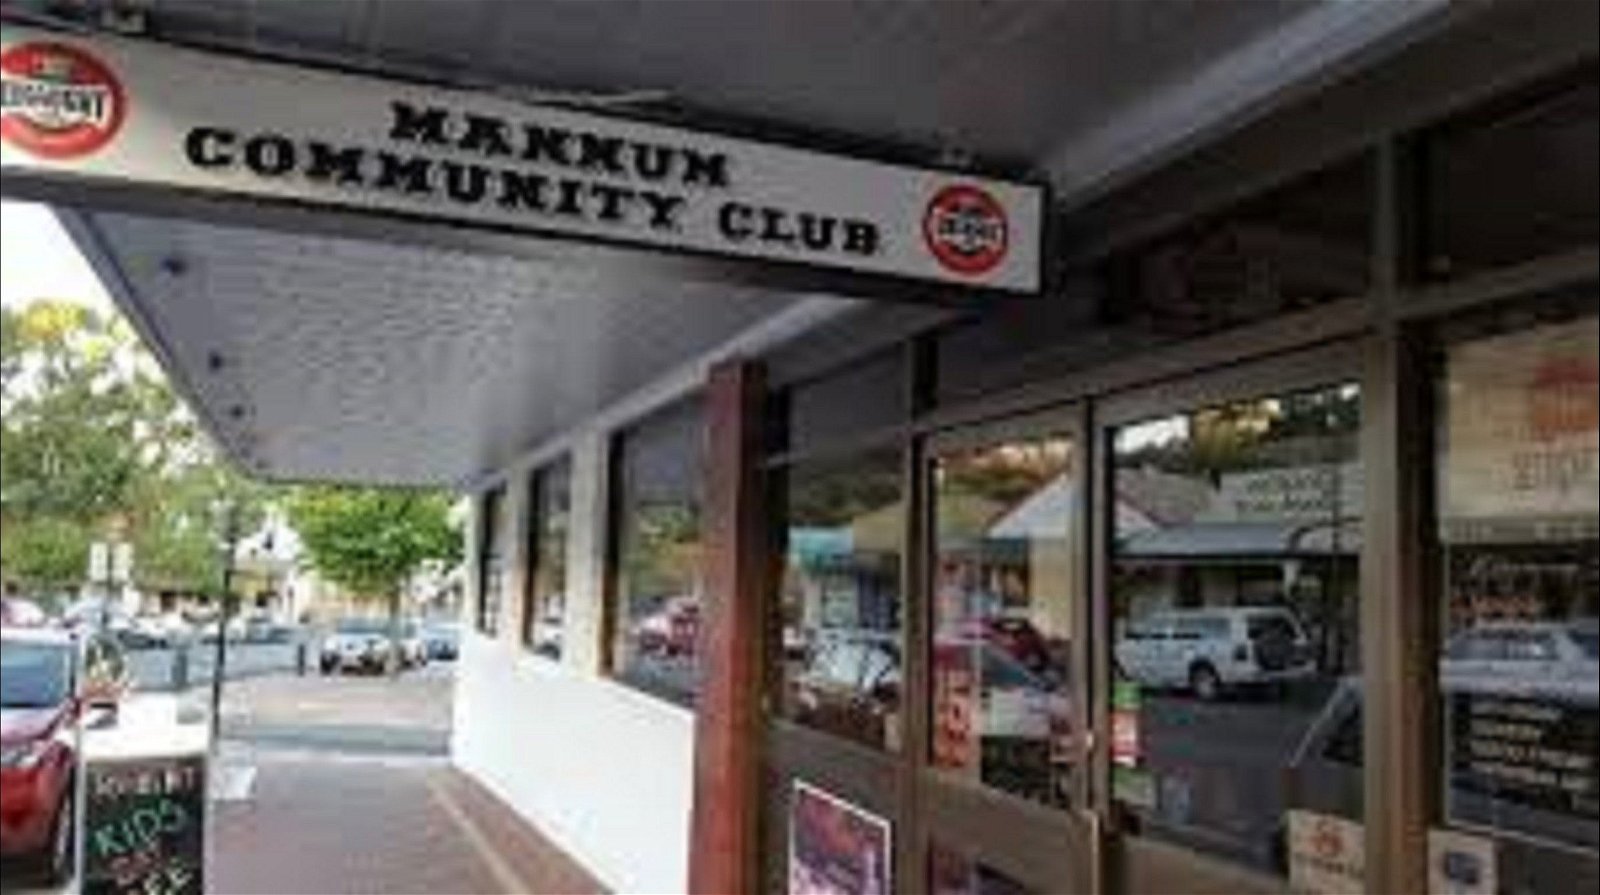 Mannum Community Club - Northern Rivers Accommodation